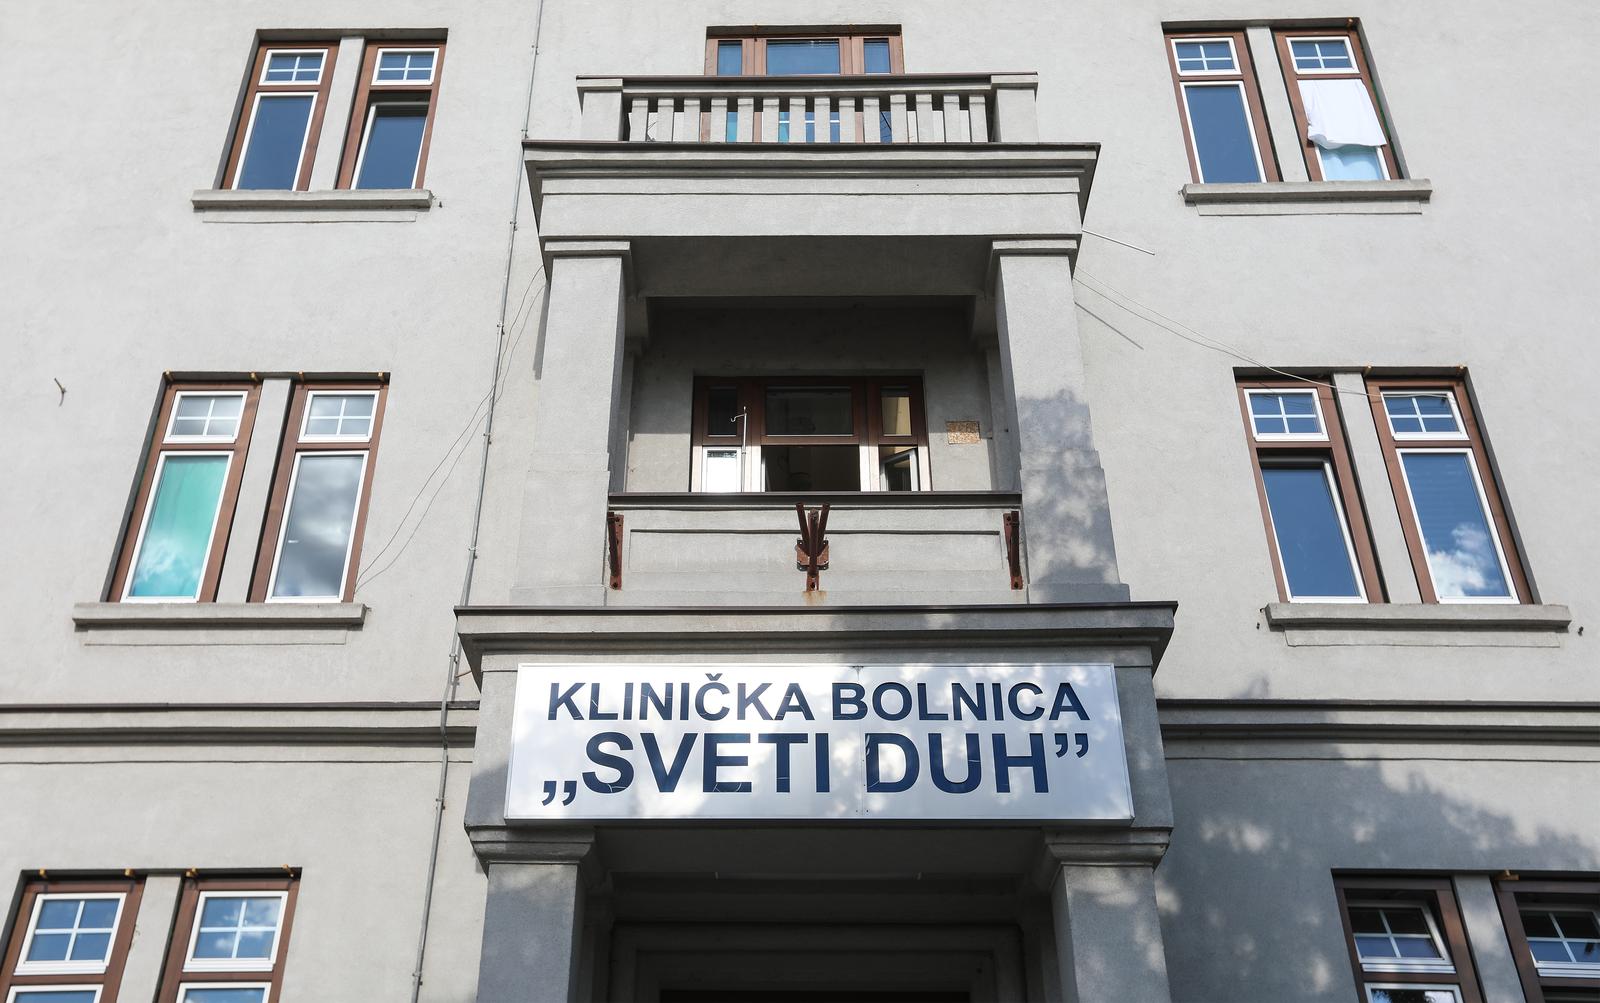 14.10.2021., Zagreb - Klinicka bolnica Sveti Duh. Photo: Robert Anic/PIXSELL